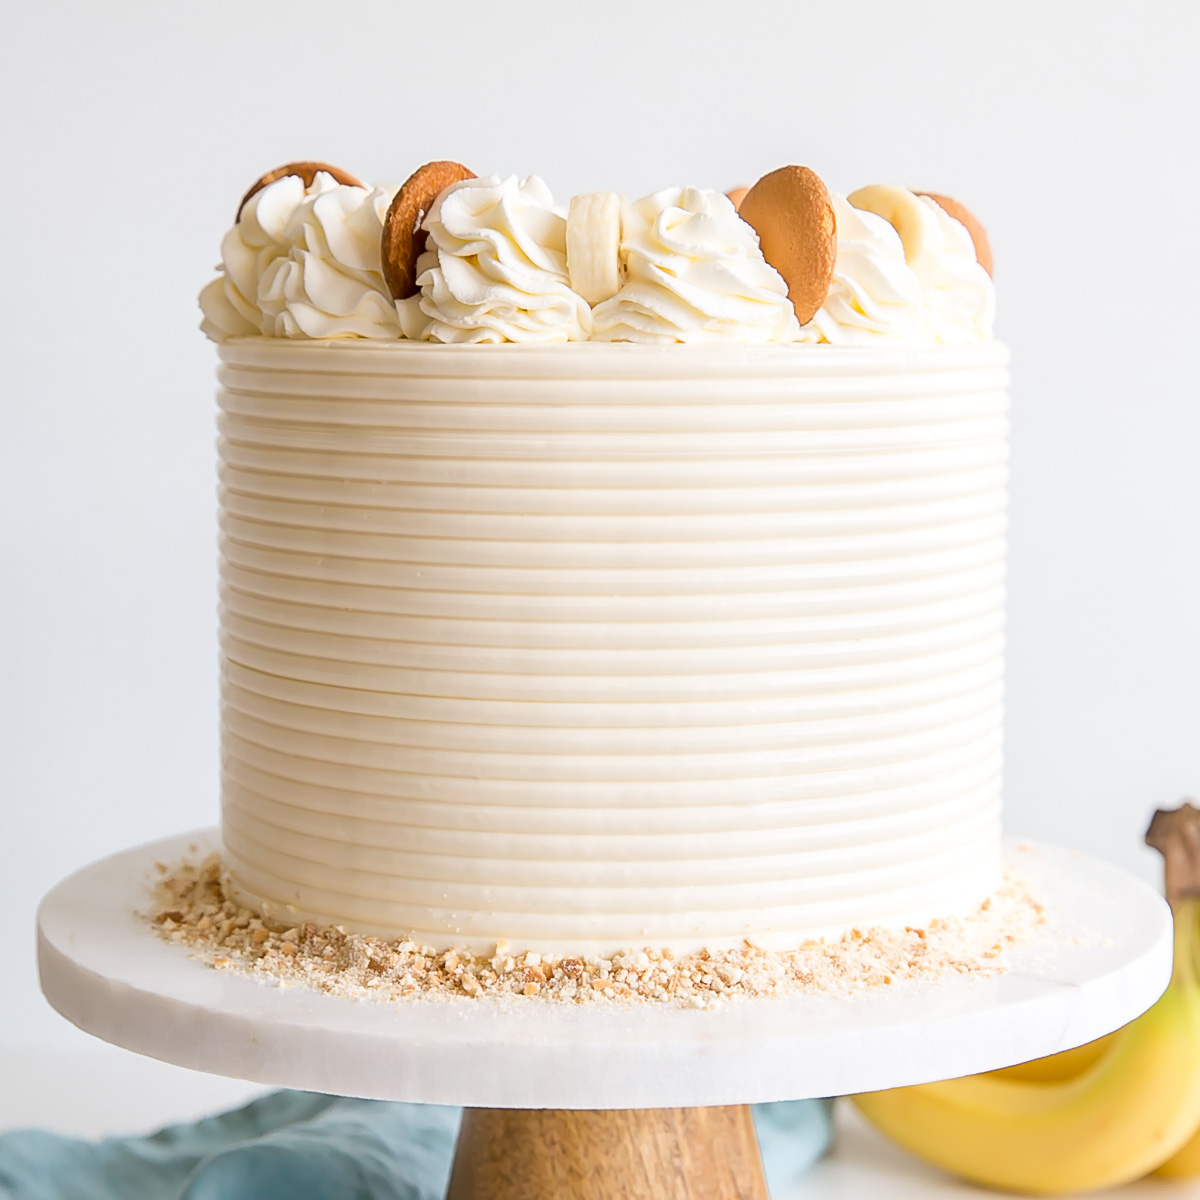 Banana Custard Cake | Banana Sponge Cake topped with Custard. Recipe:  https://www.pinoycookingrecipes.com/recipe/banana-custard-cake #bananacake # custard #cake | By Pinoy Cooking Recipes by Janette | Facebook